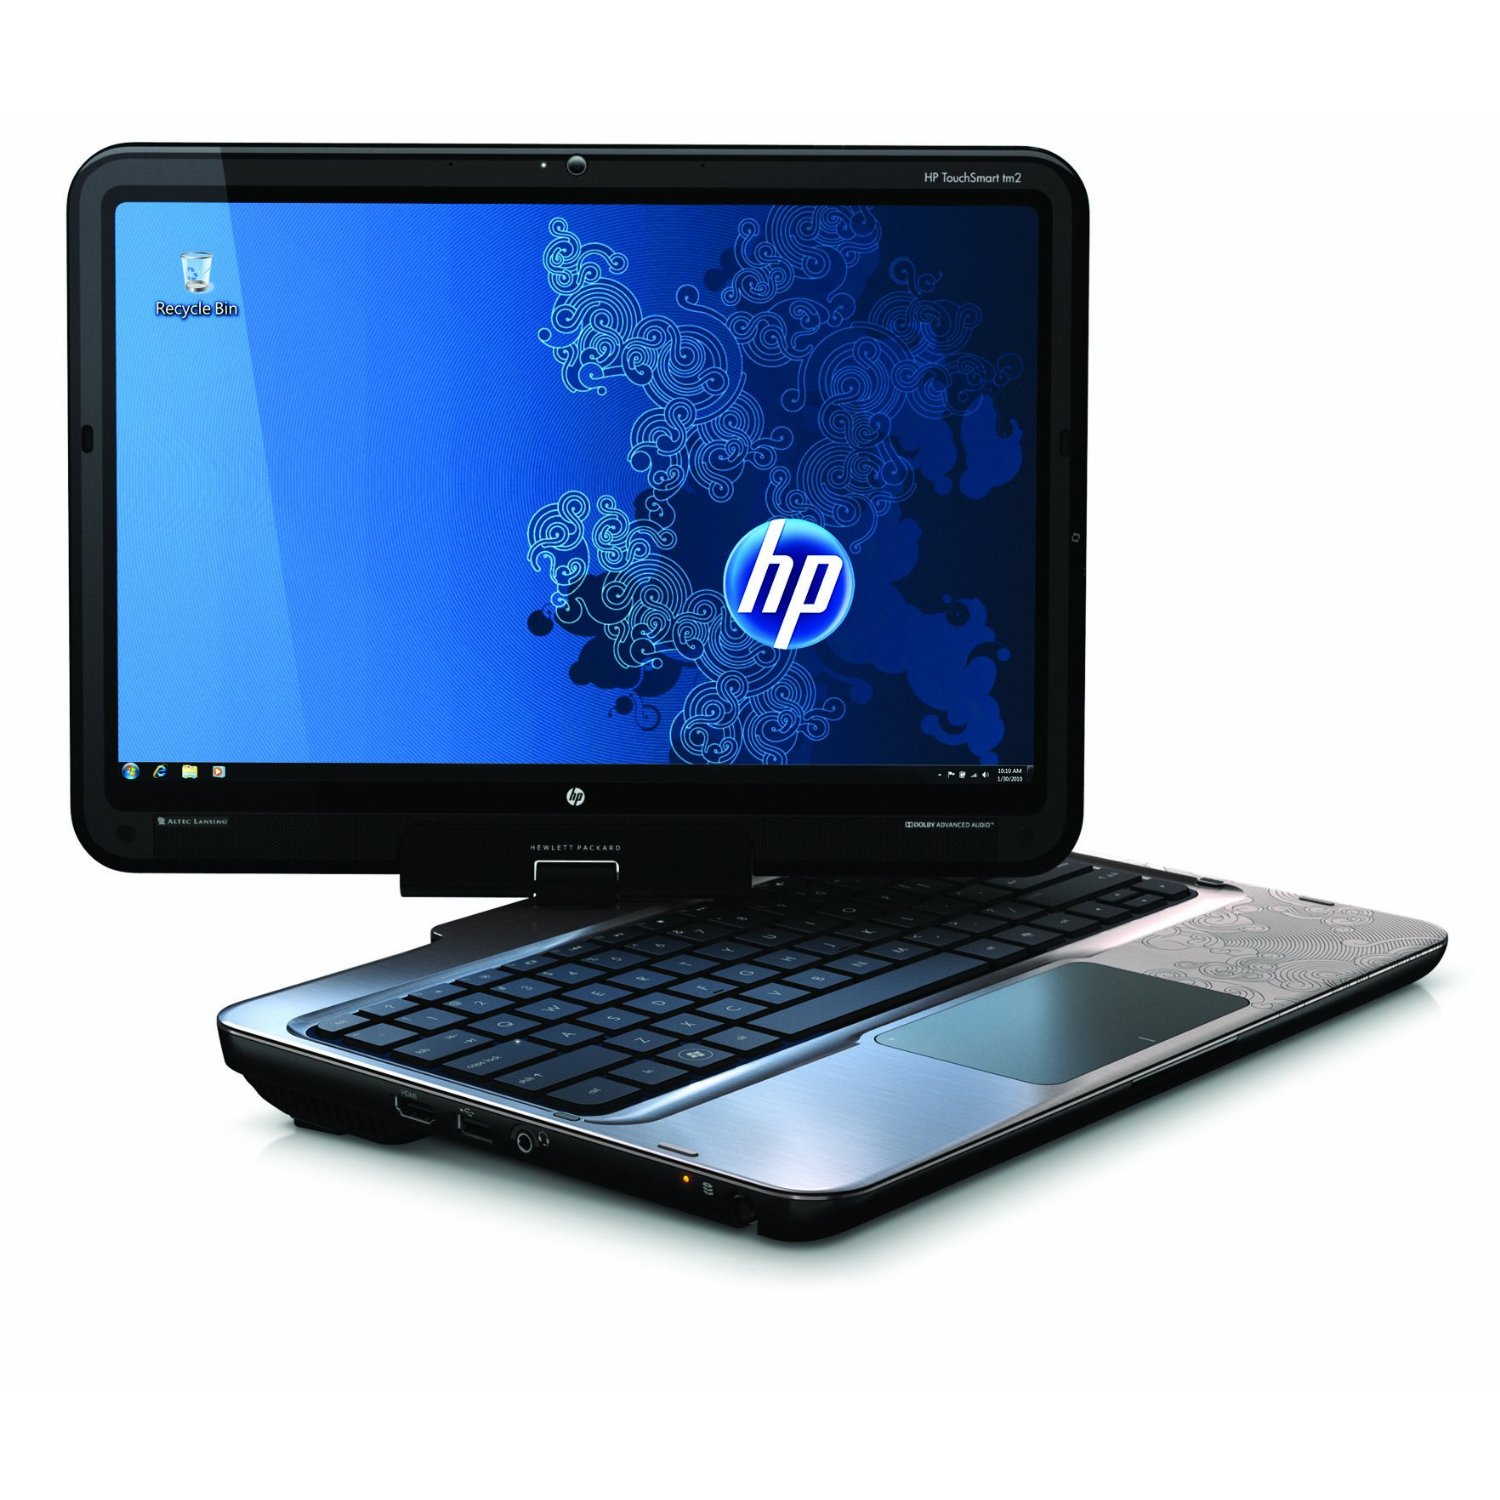 http://thetechjournal.com/wp-content/uploads/images/1107/1312084315-hp-touchsmart-tm21070us-121inch-riptide-argento-laptop--3.jpg